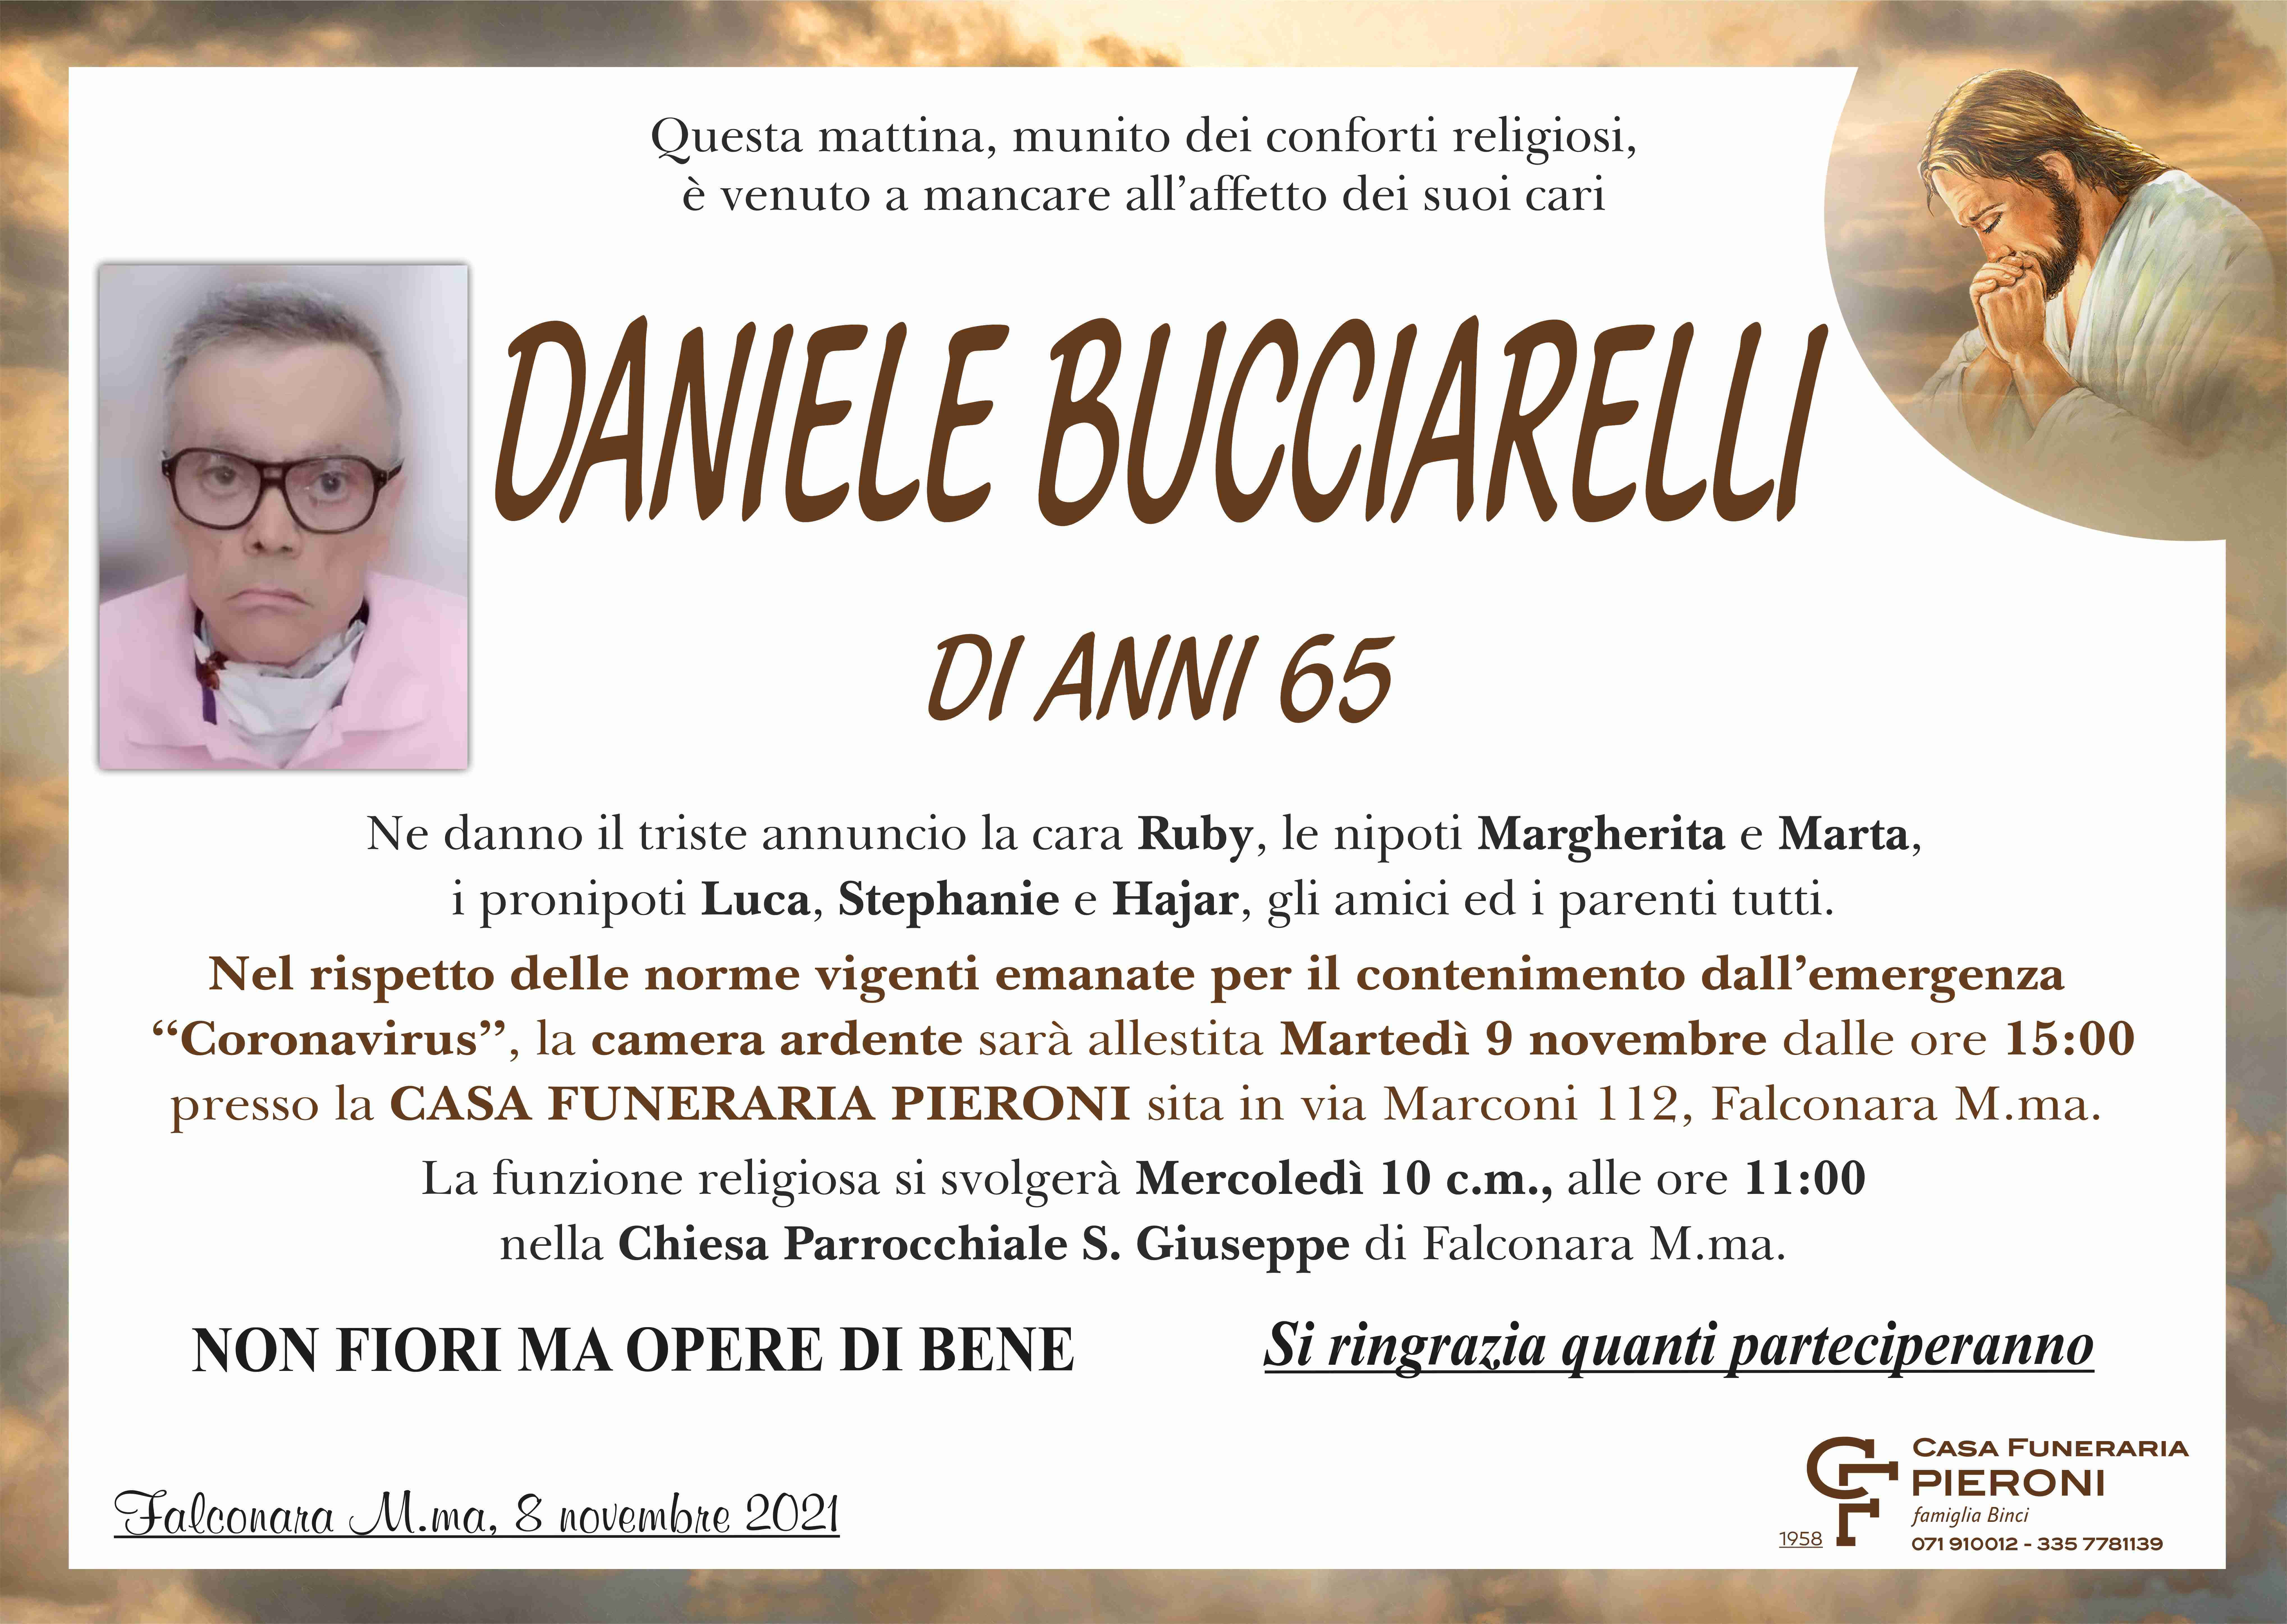 Daniele Bucciarelli